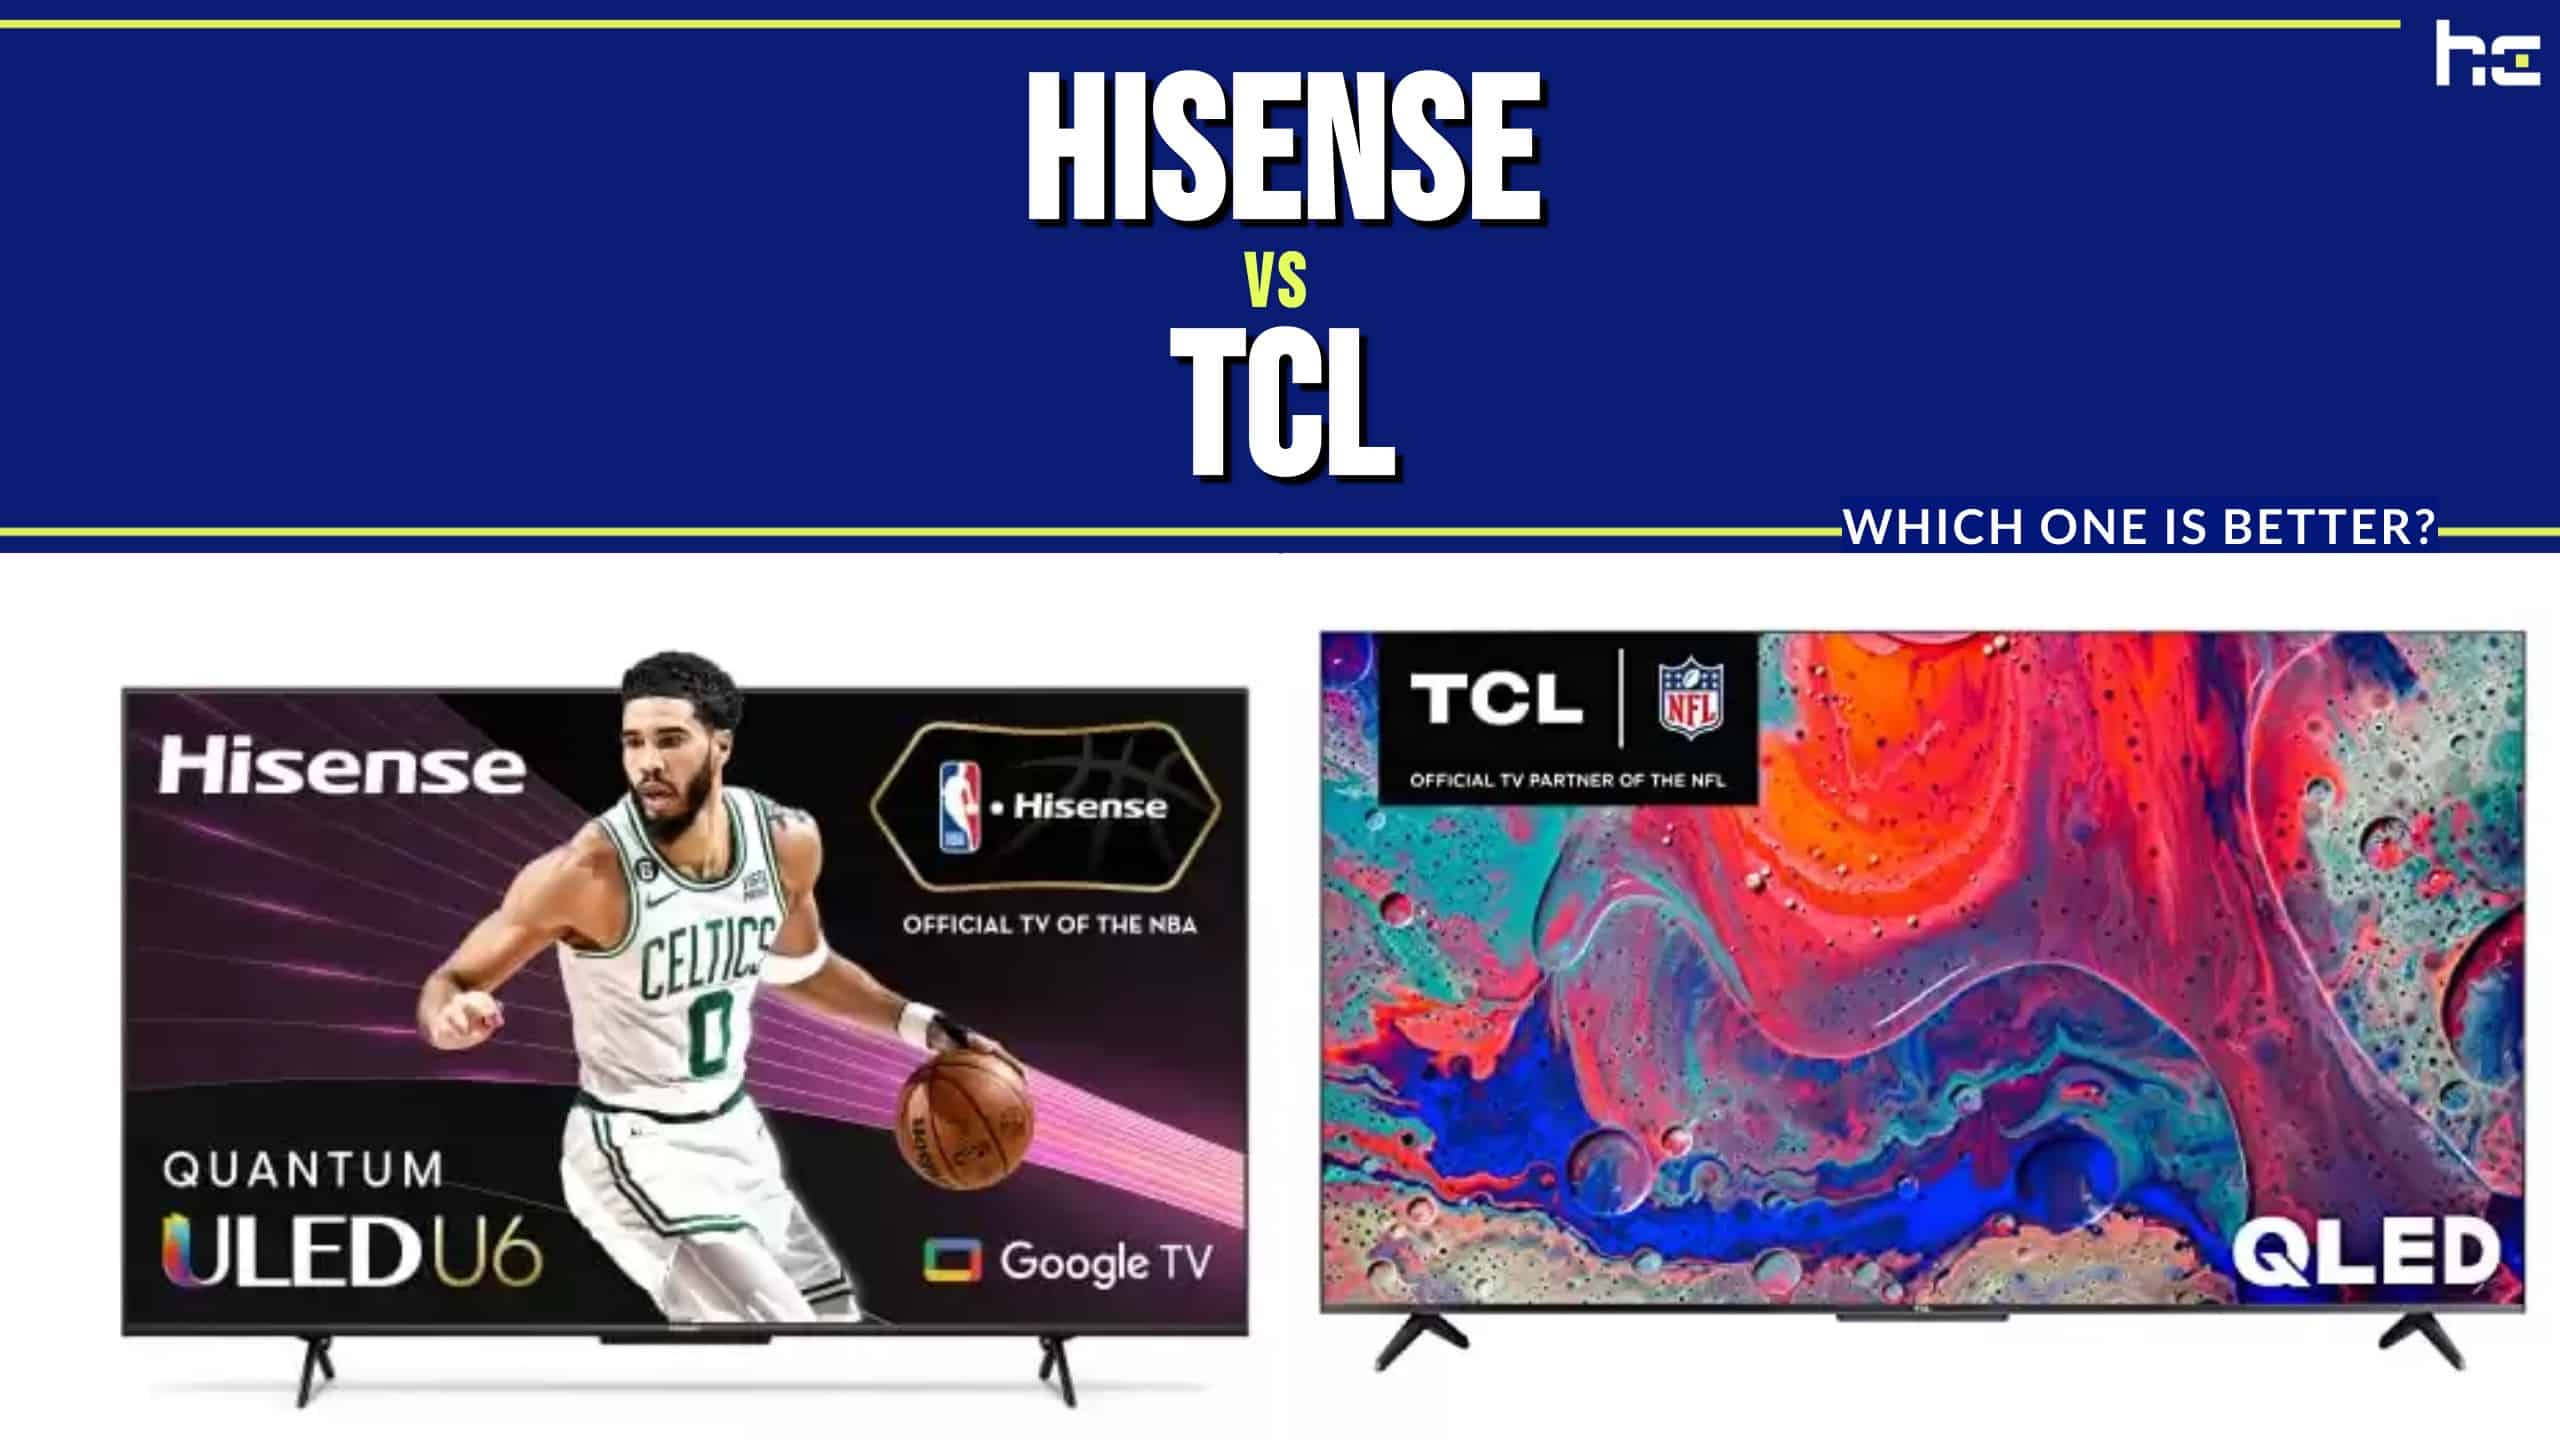 Hisense vs TCL featured image